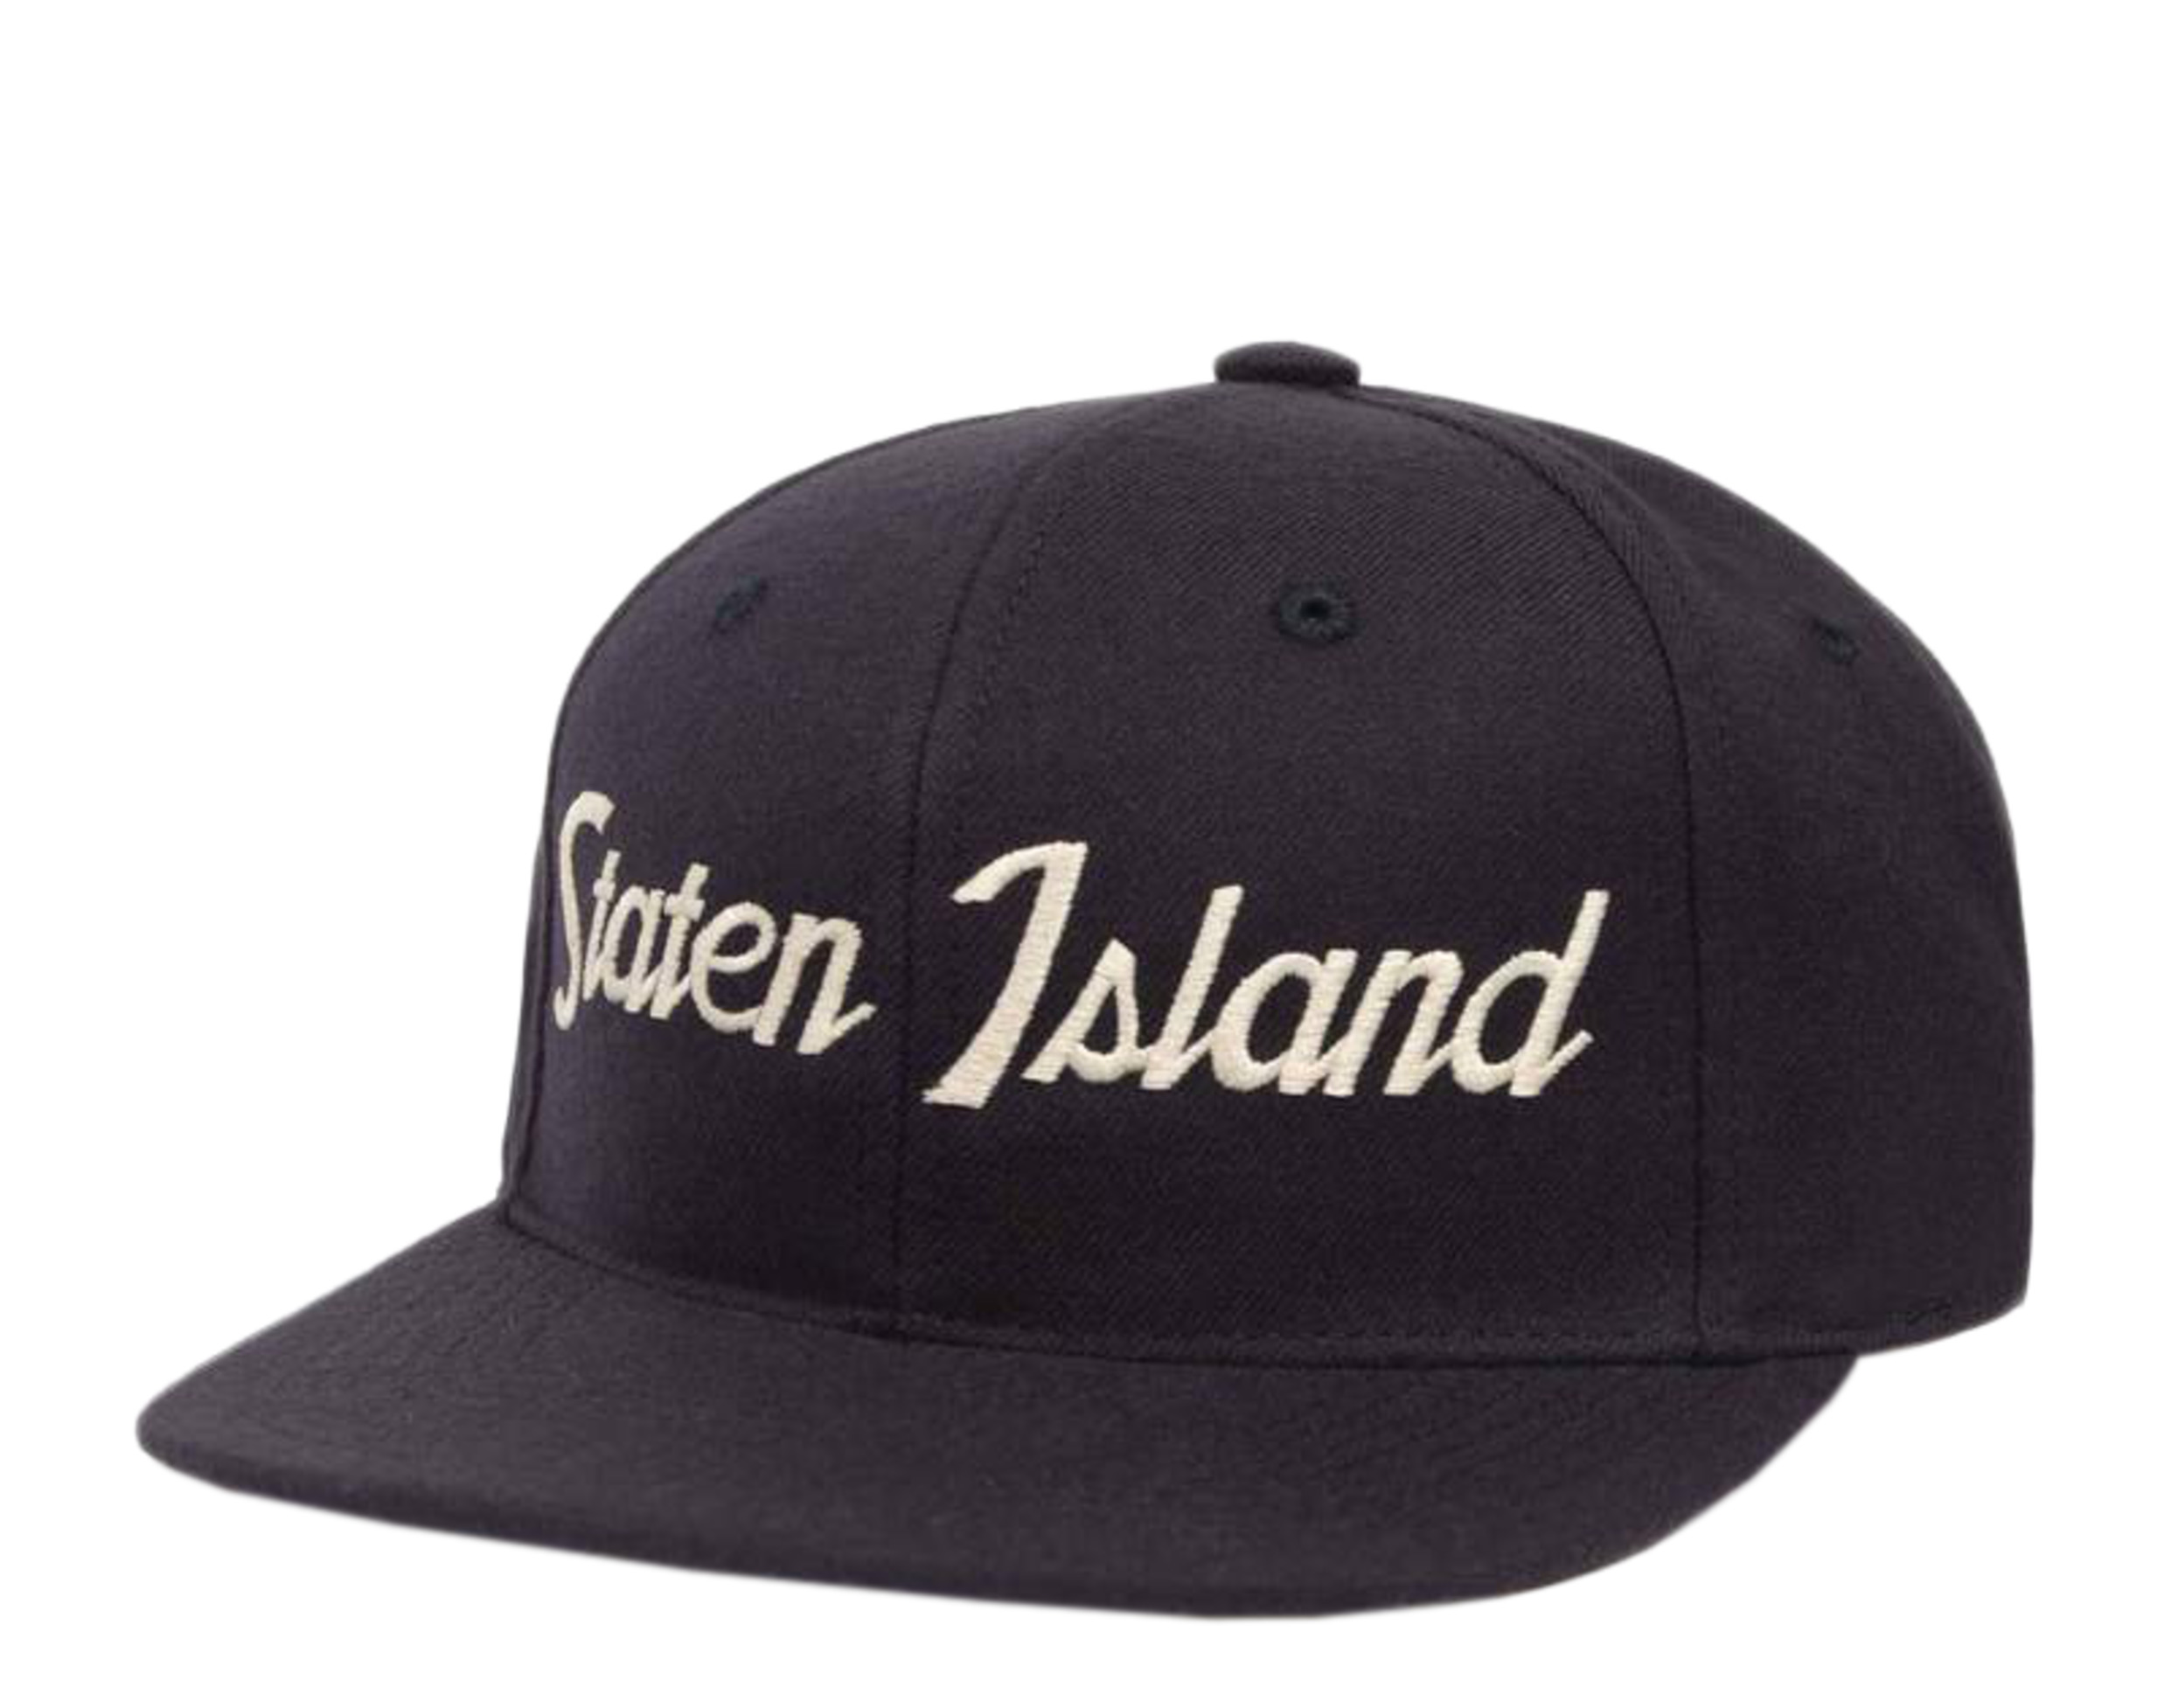 Hood Hat LLC Hood Staten Island Adjustable Wool Navy/Ivory Hat 100-MWL002-NY028-NY